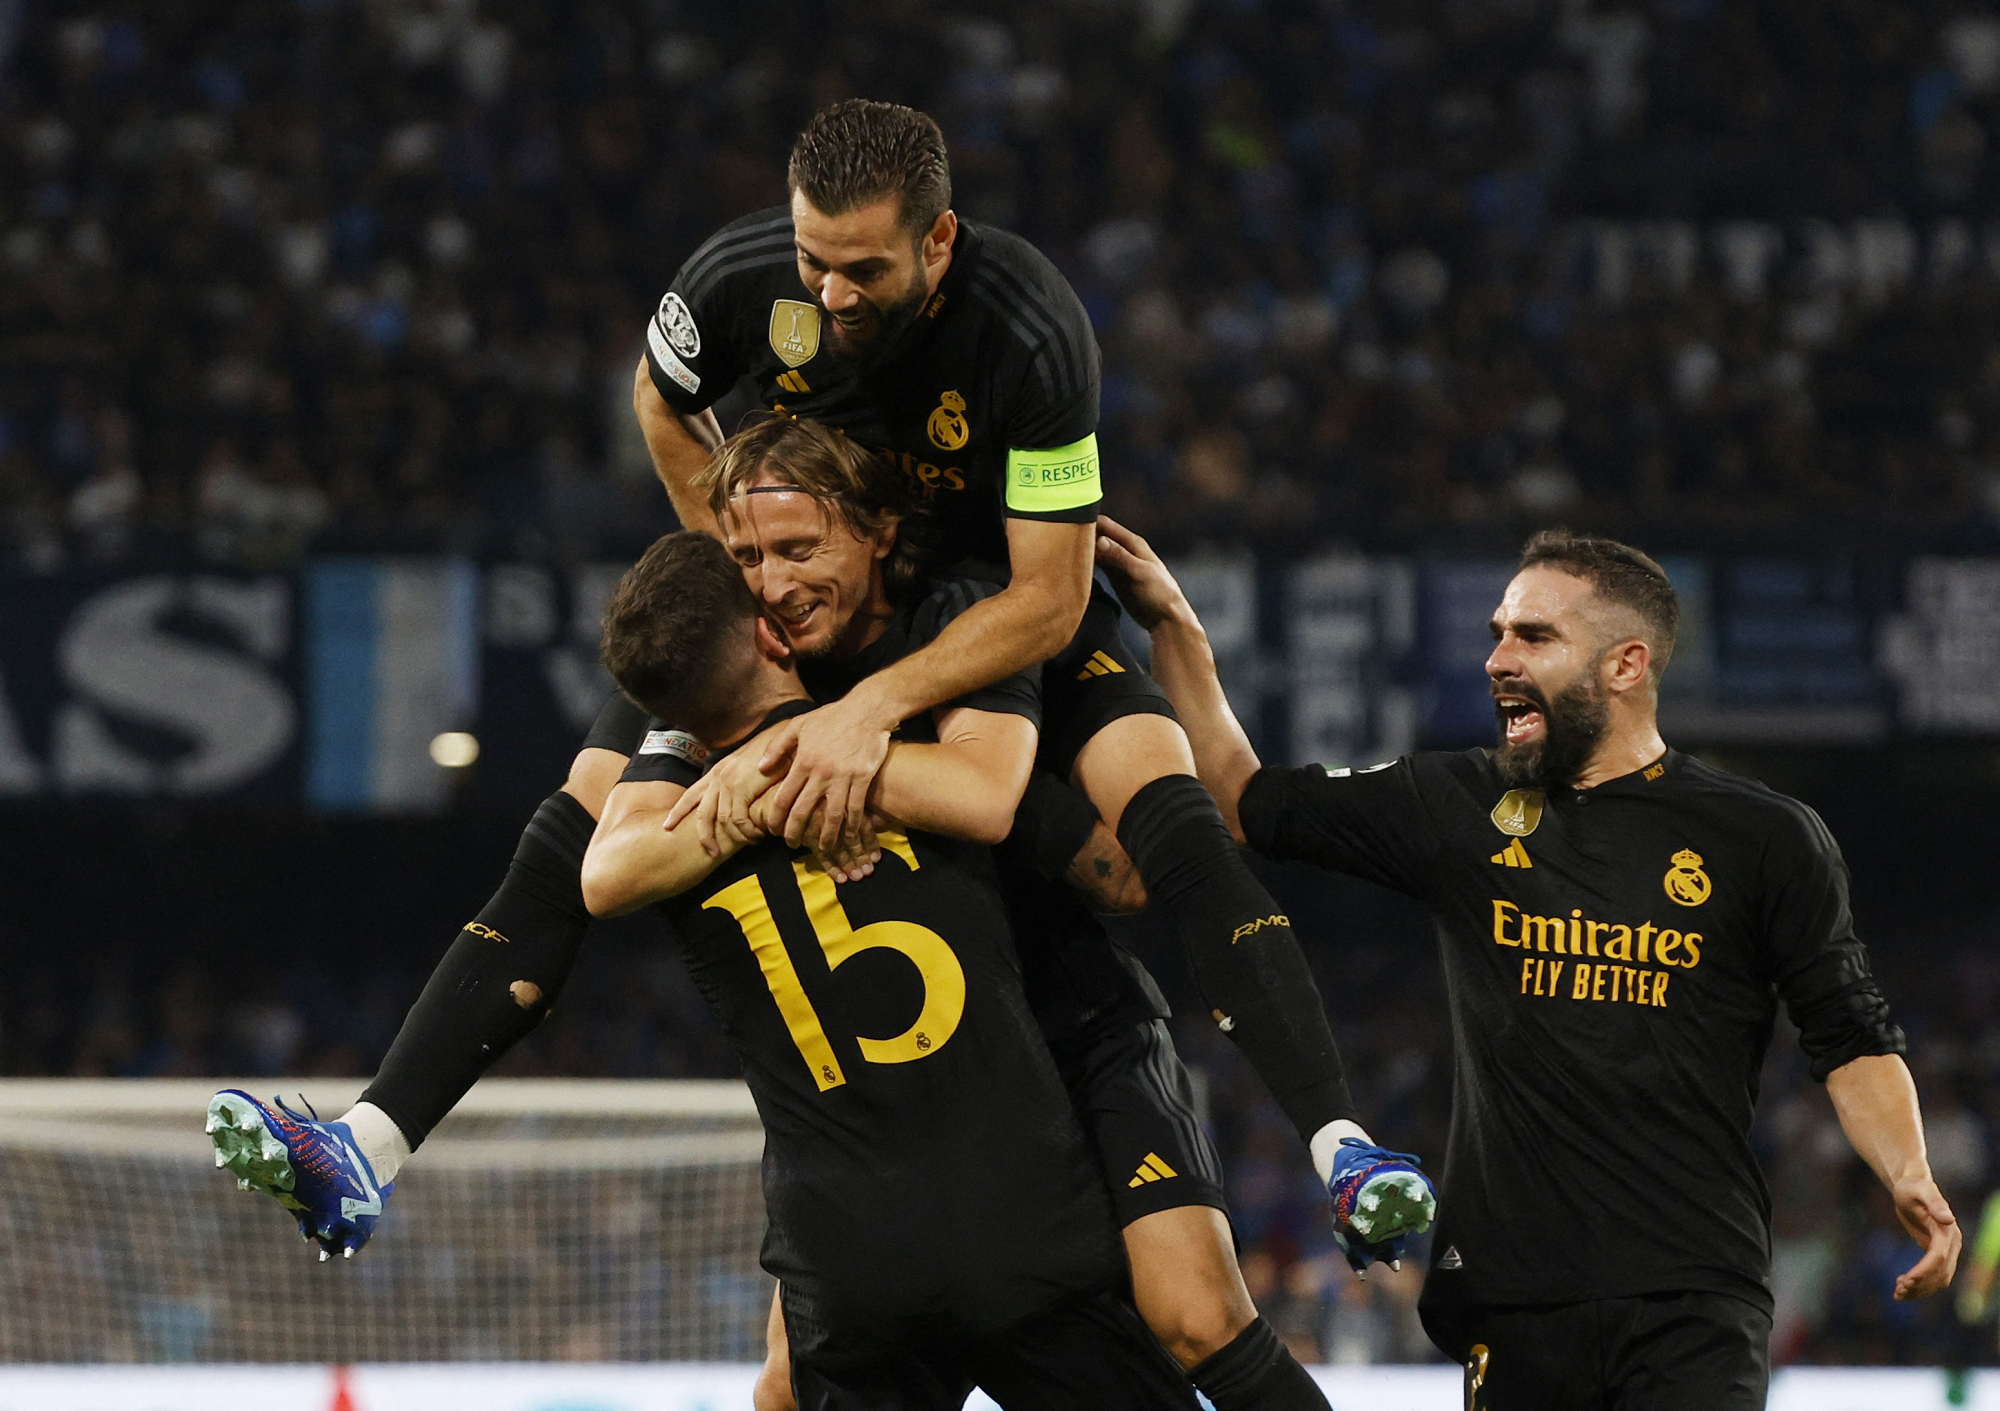 Real Madrid - Napoli summary: score, goals, highlights